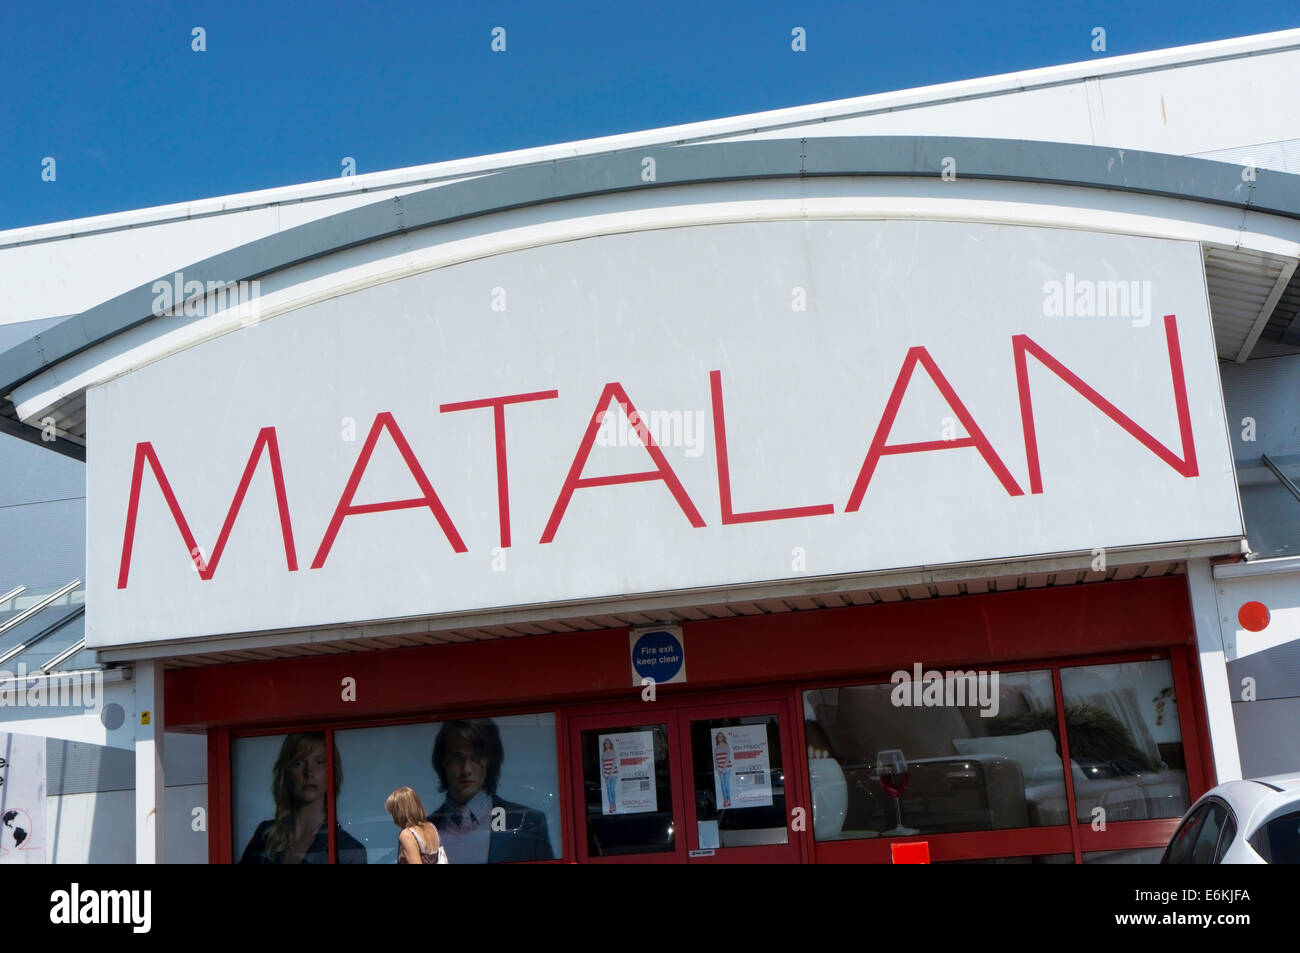 Sign over entrance to Matalan shop, UK. Stock Photo